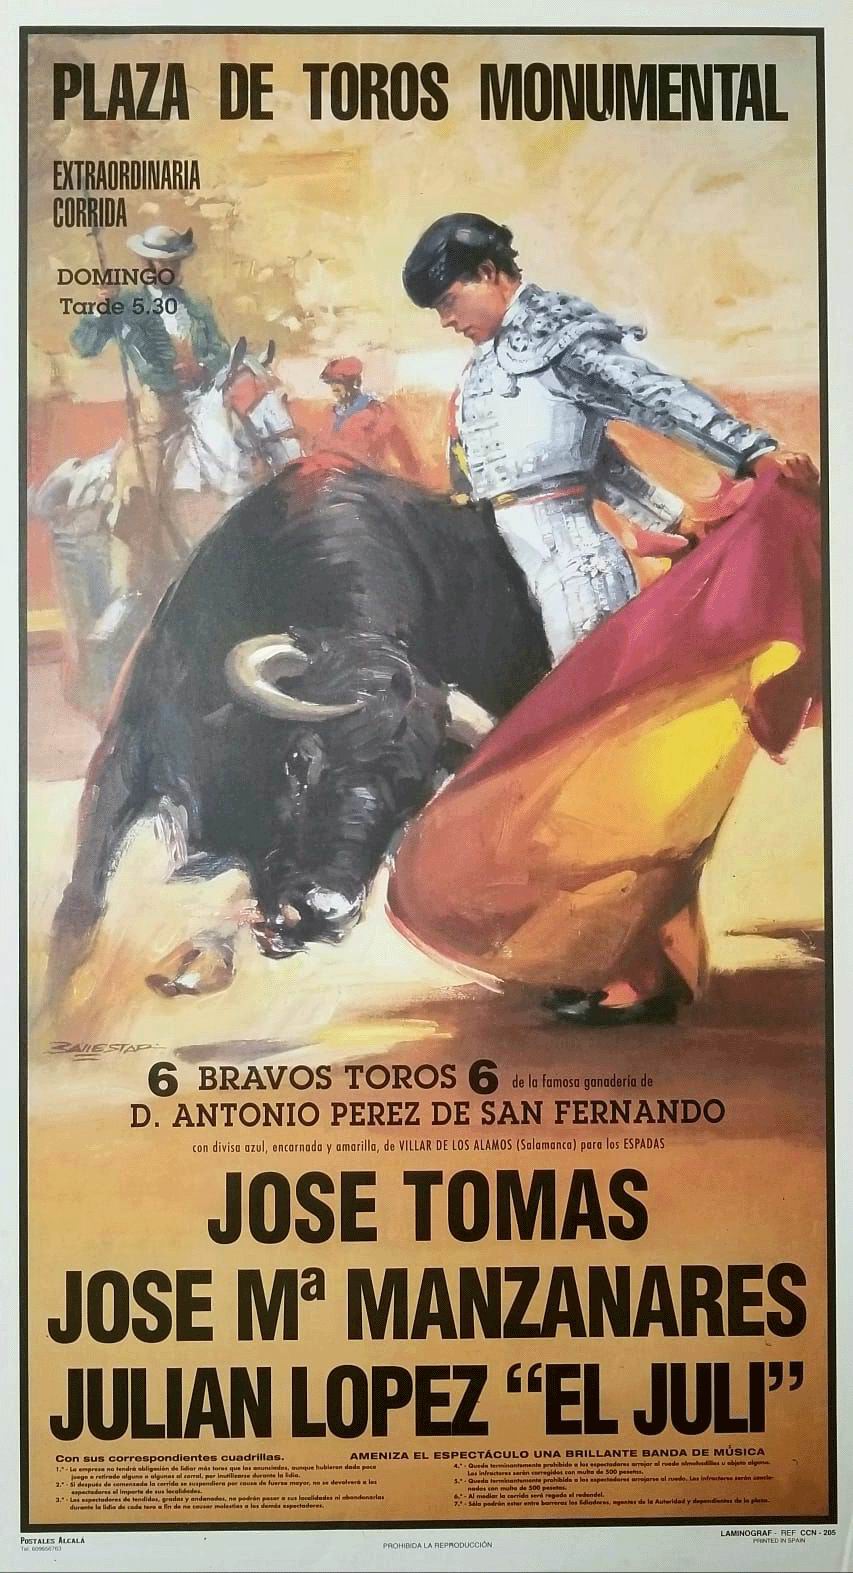 Poster of the Monumental bullring of Madrid. Bullfighters José Tomás, José Mª Manzanares, Julian López 